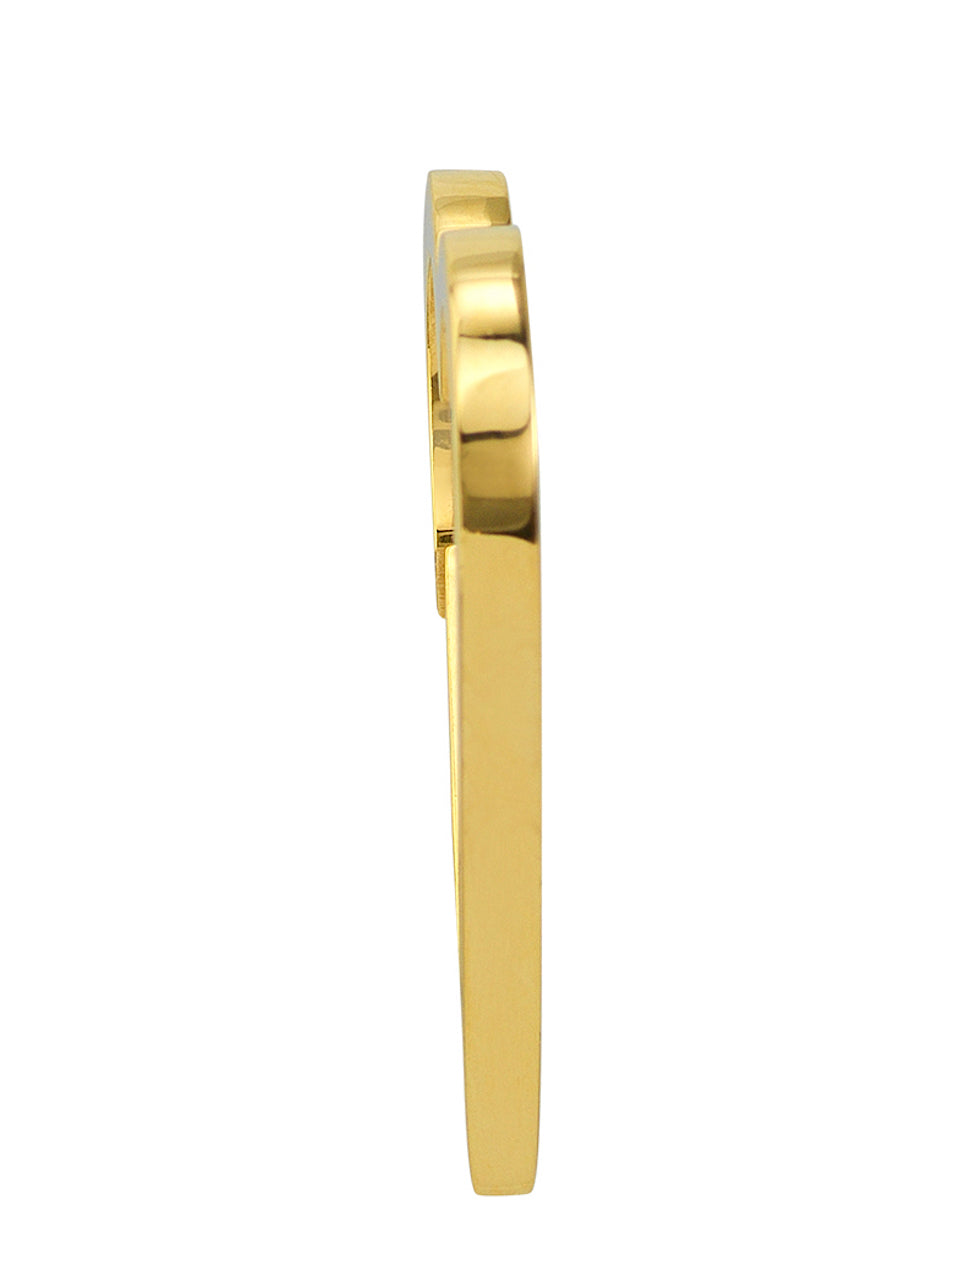 14k Yellow Gold Heart Push Clasp Lock Connector Pendant Charm Hanger Bail Enhancer